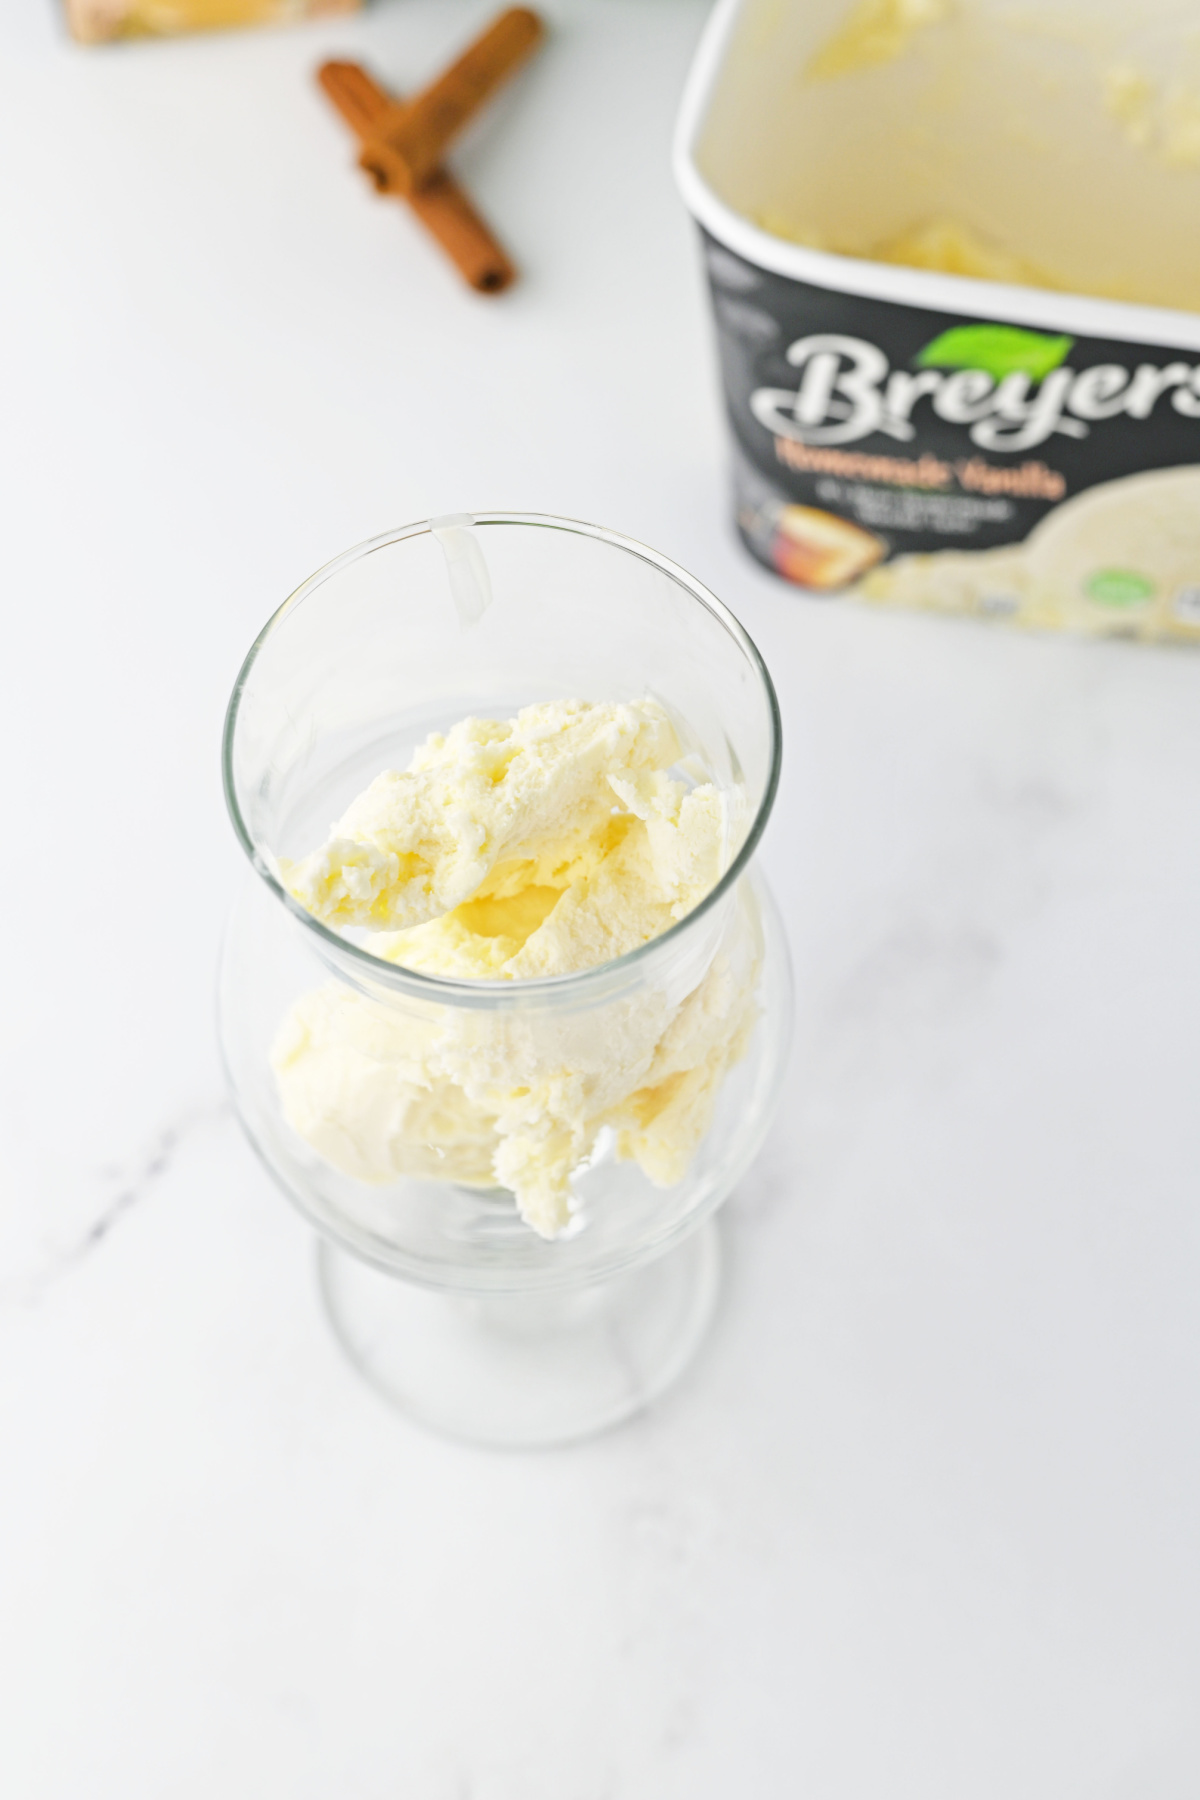 Breyer's vanilla ice cream in a glass.